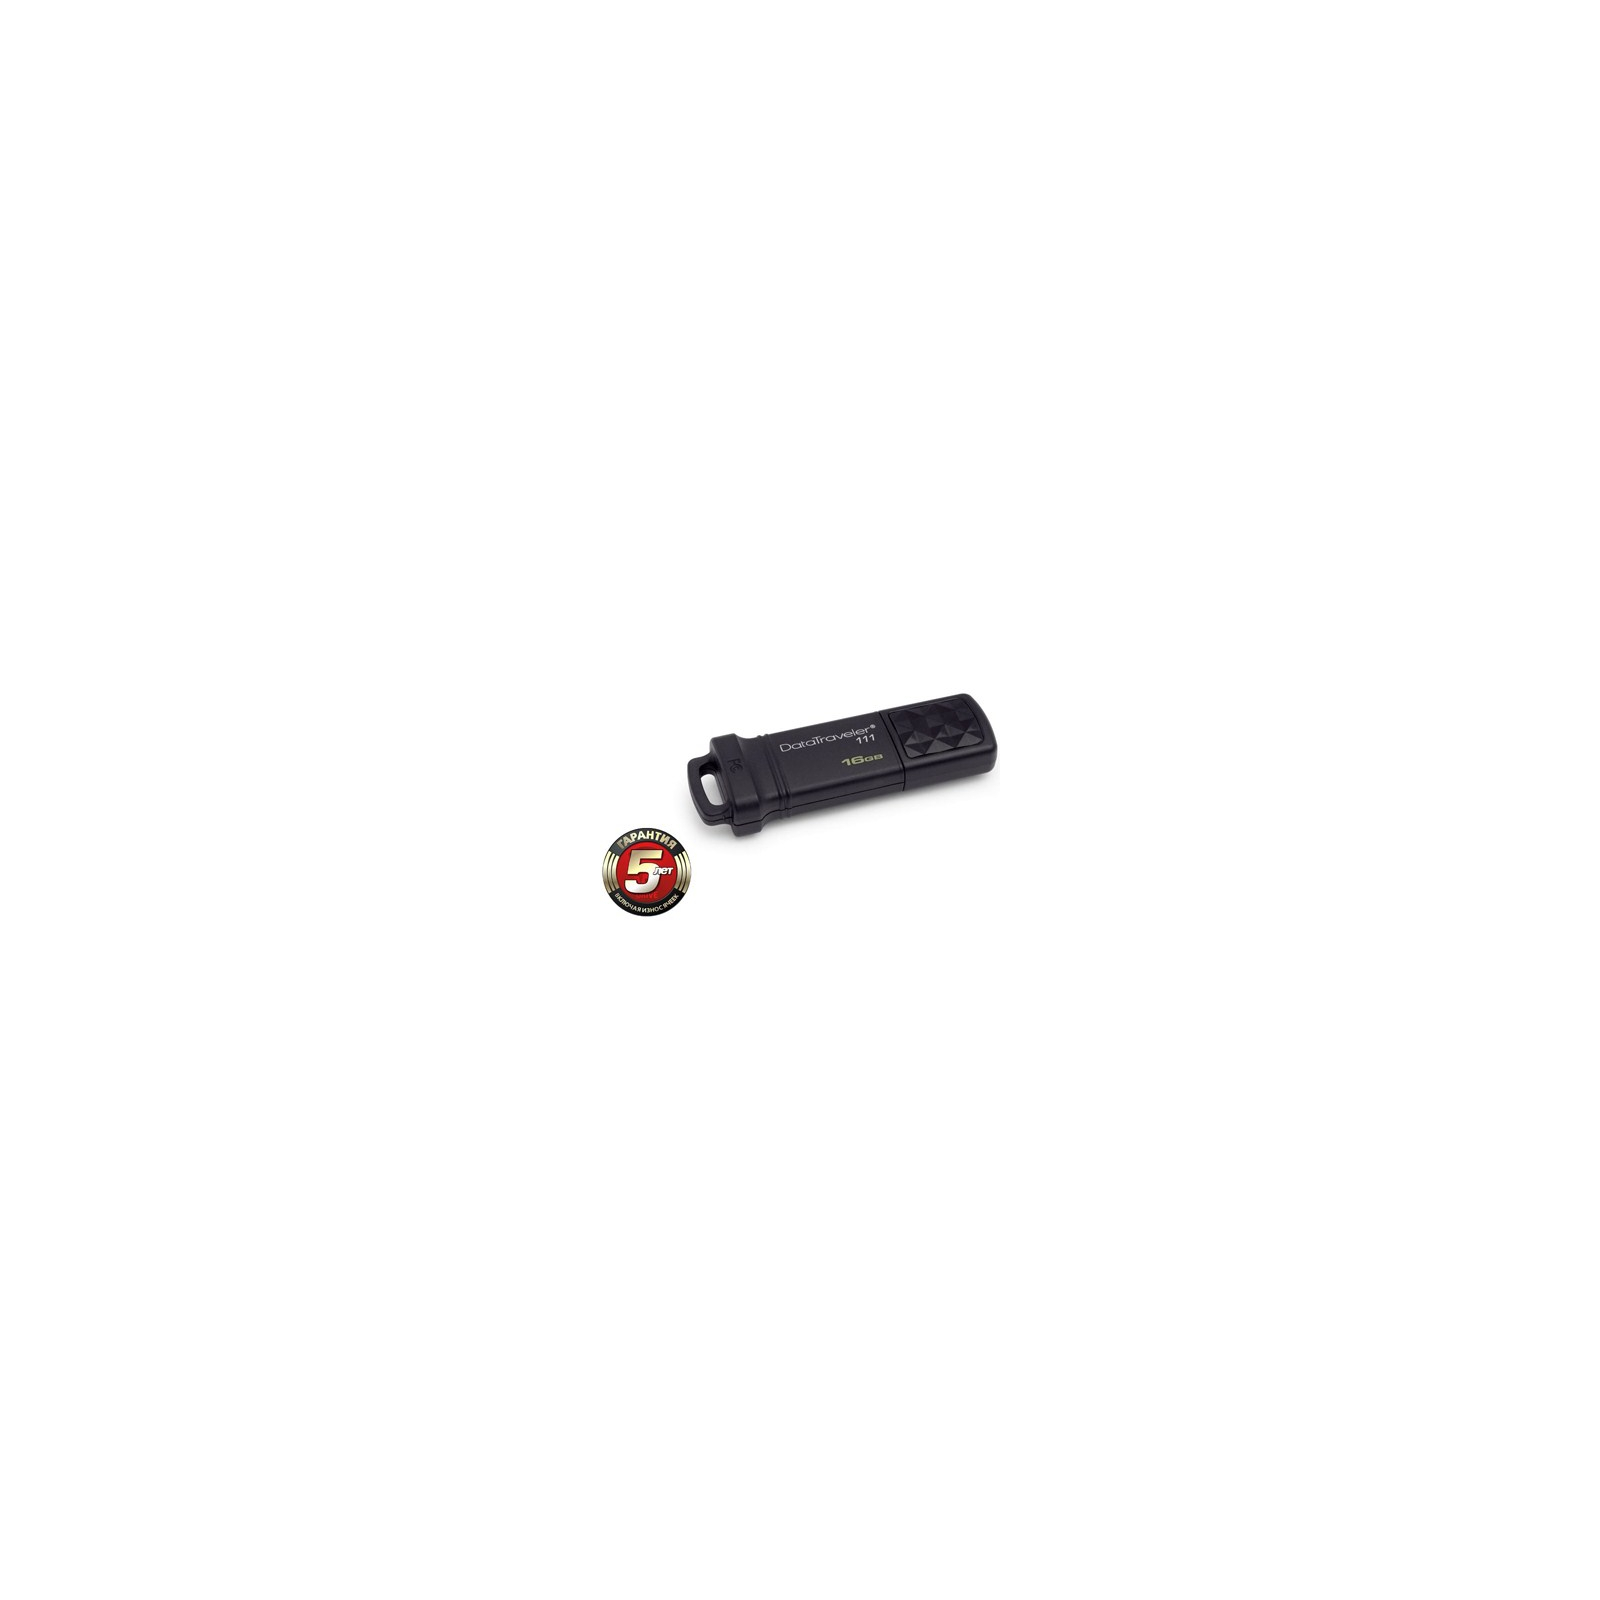 USB флеш накопитель Kingston 16Gb DataTraveler DT111 Black (DT111/16GB)